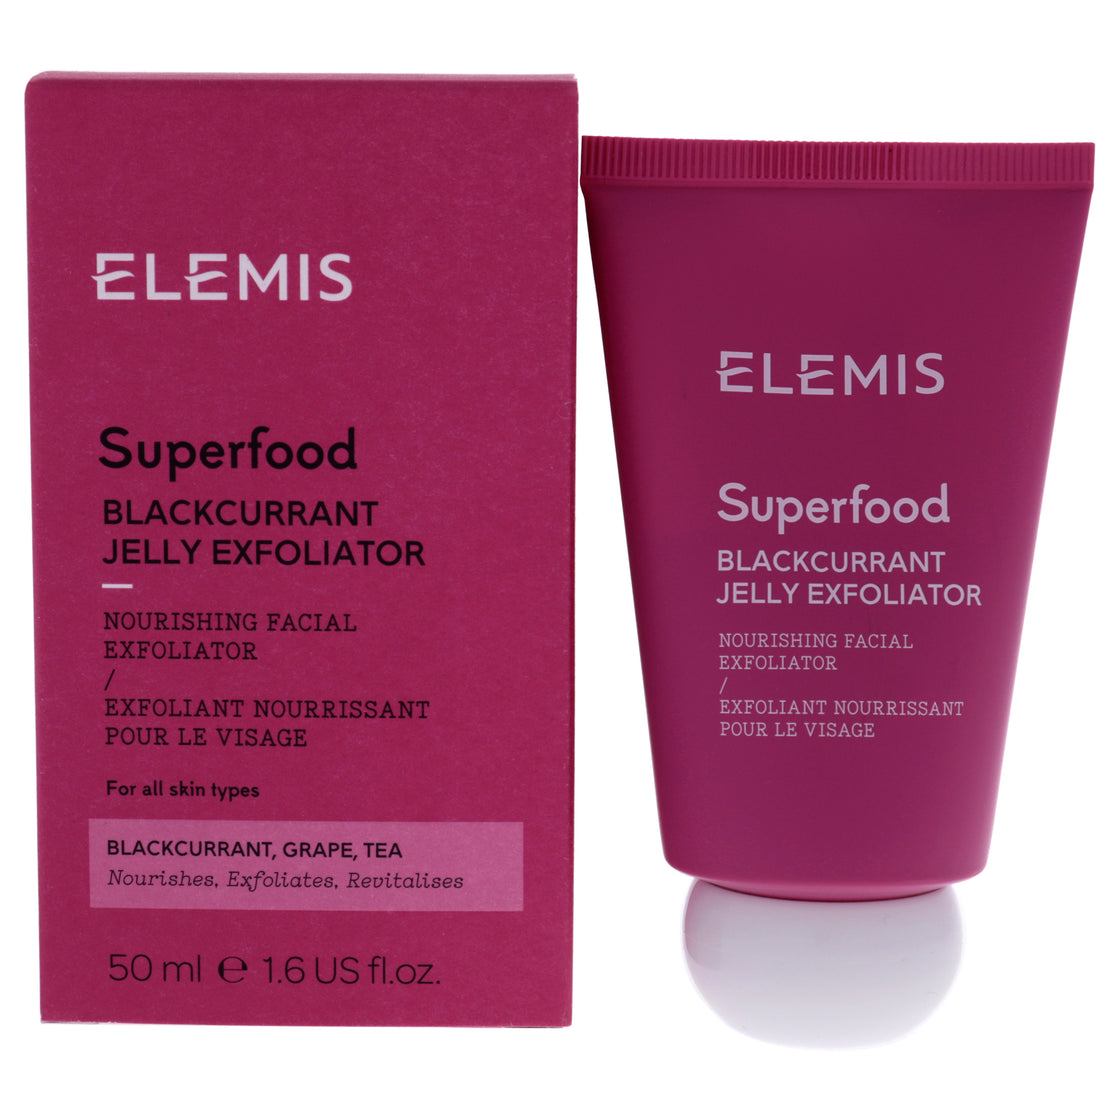 Superfood Blackcurrant Jelly Exfoliator - All Skin Types by Elemis for Women - 1.6 oz Exfoliator